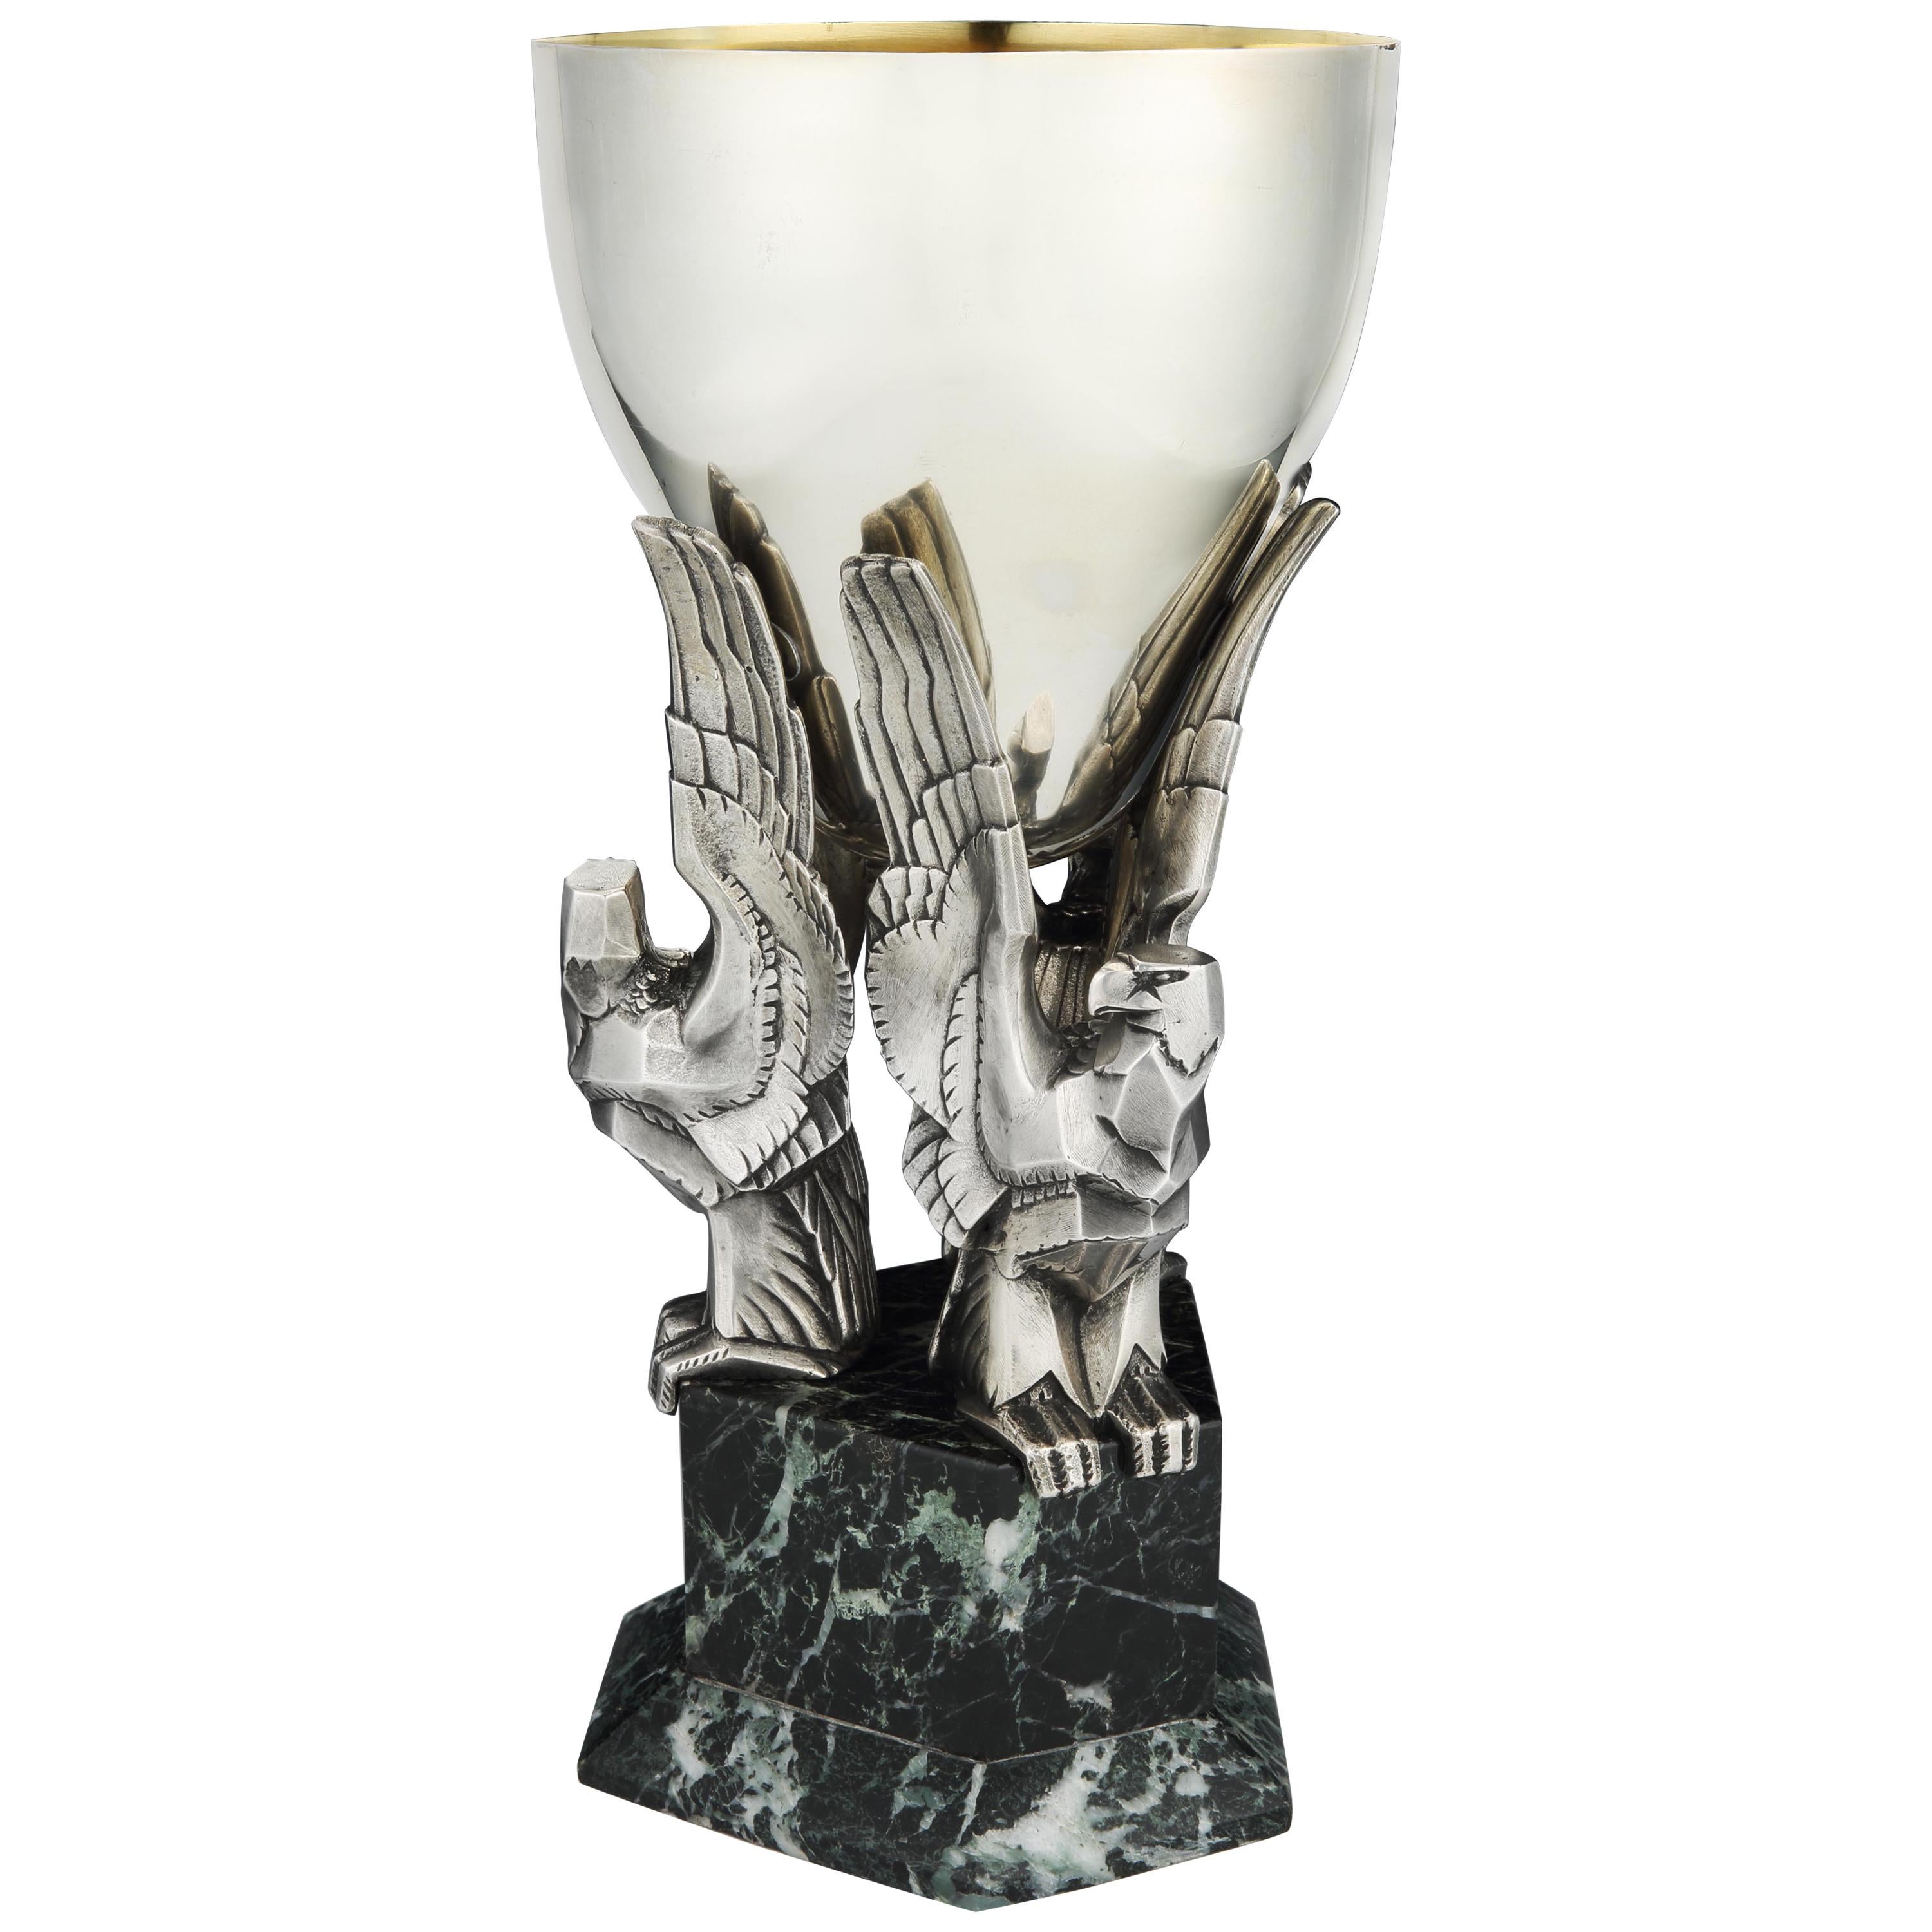 Italian Art Deco 'Eagle' trophy